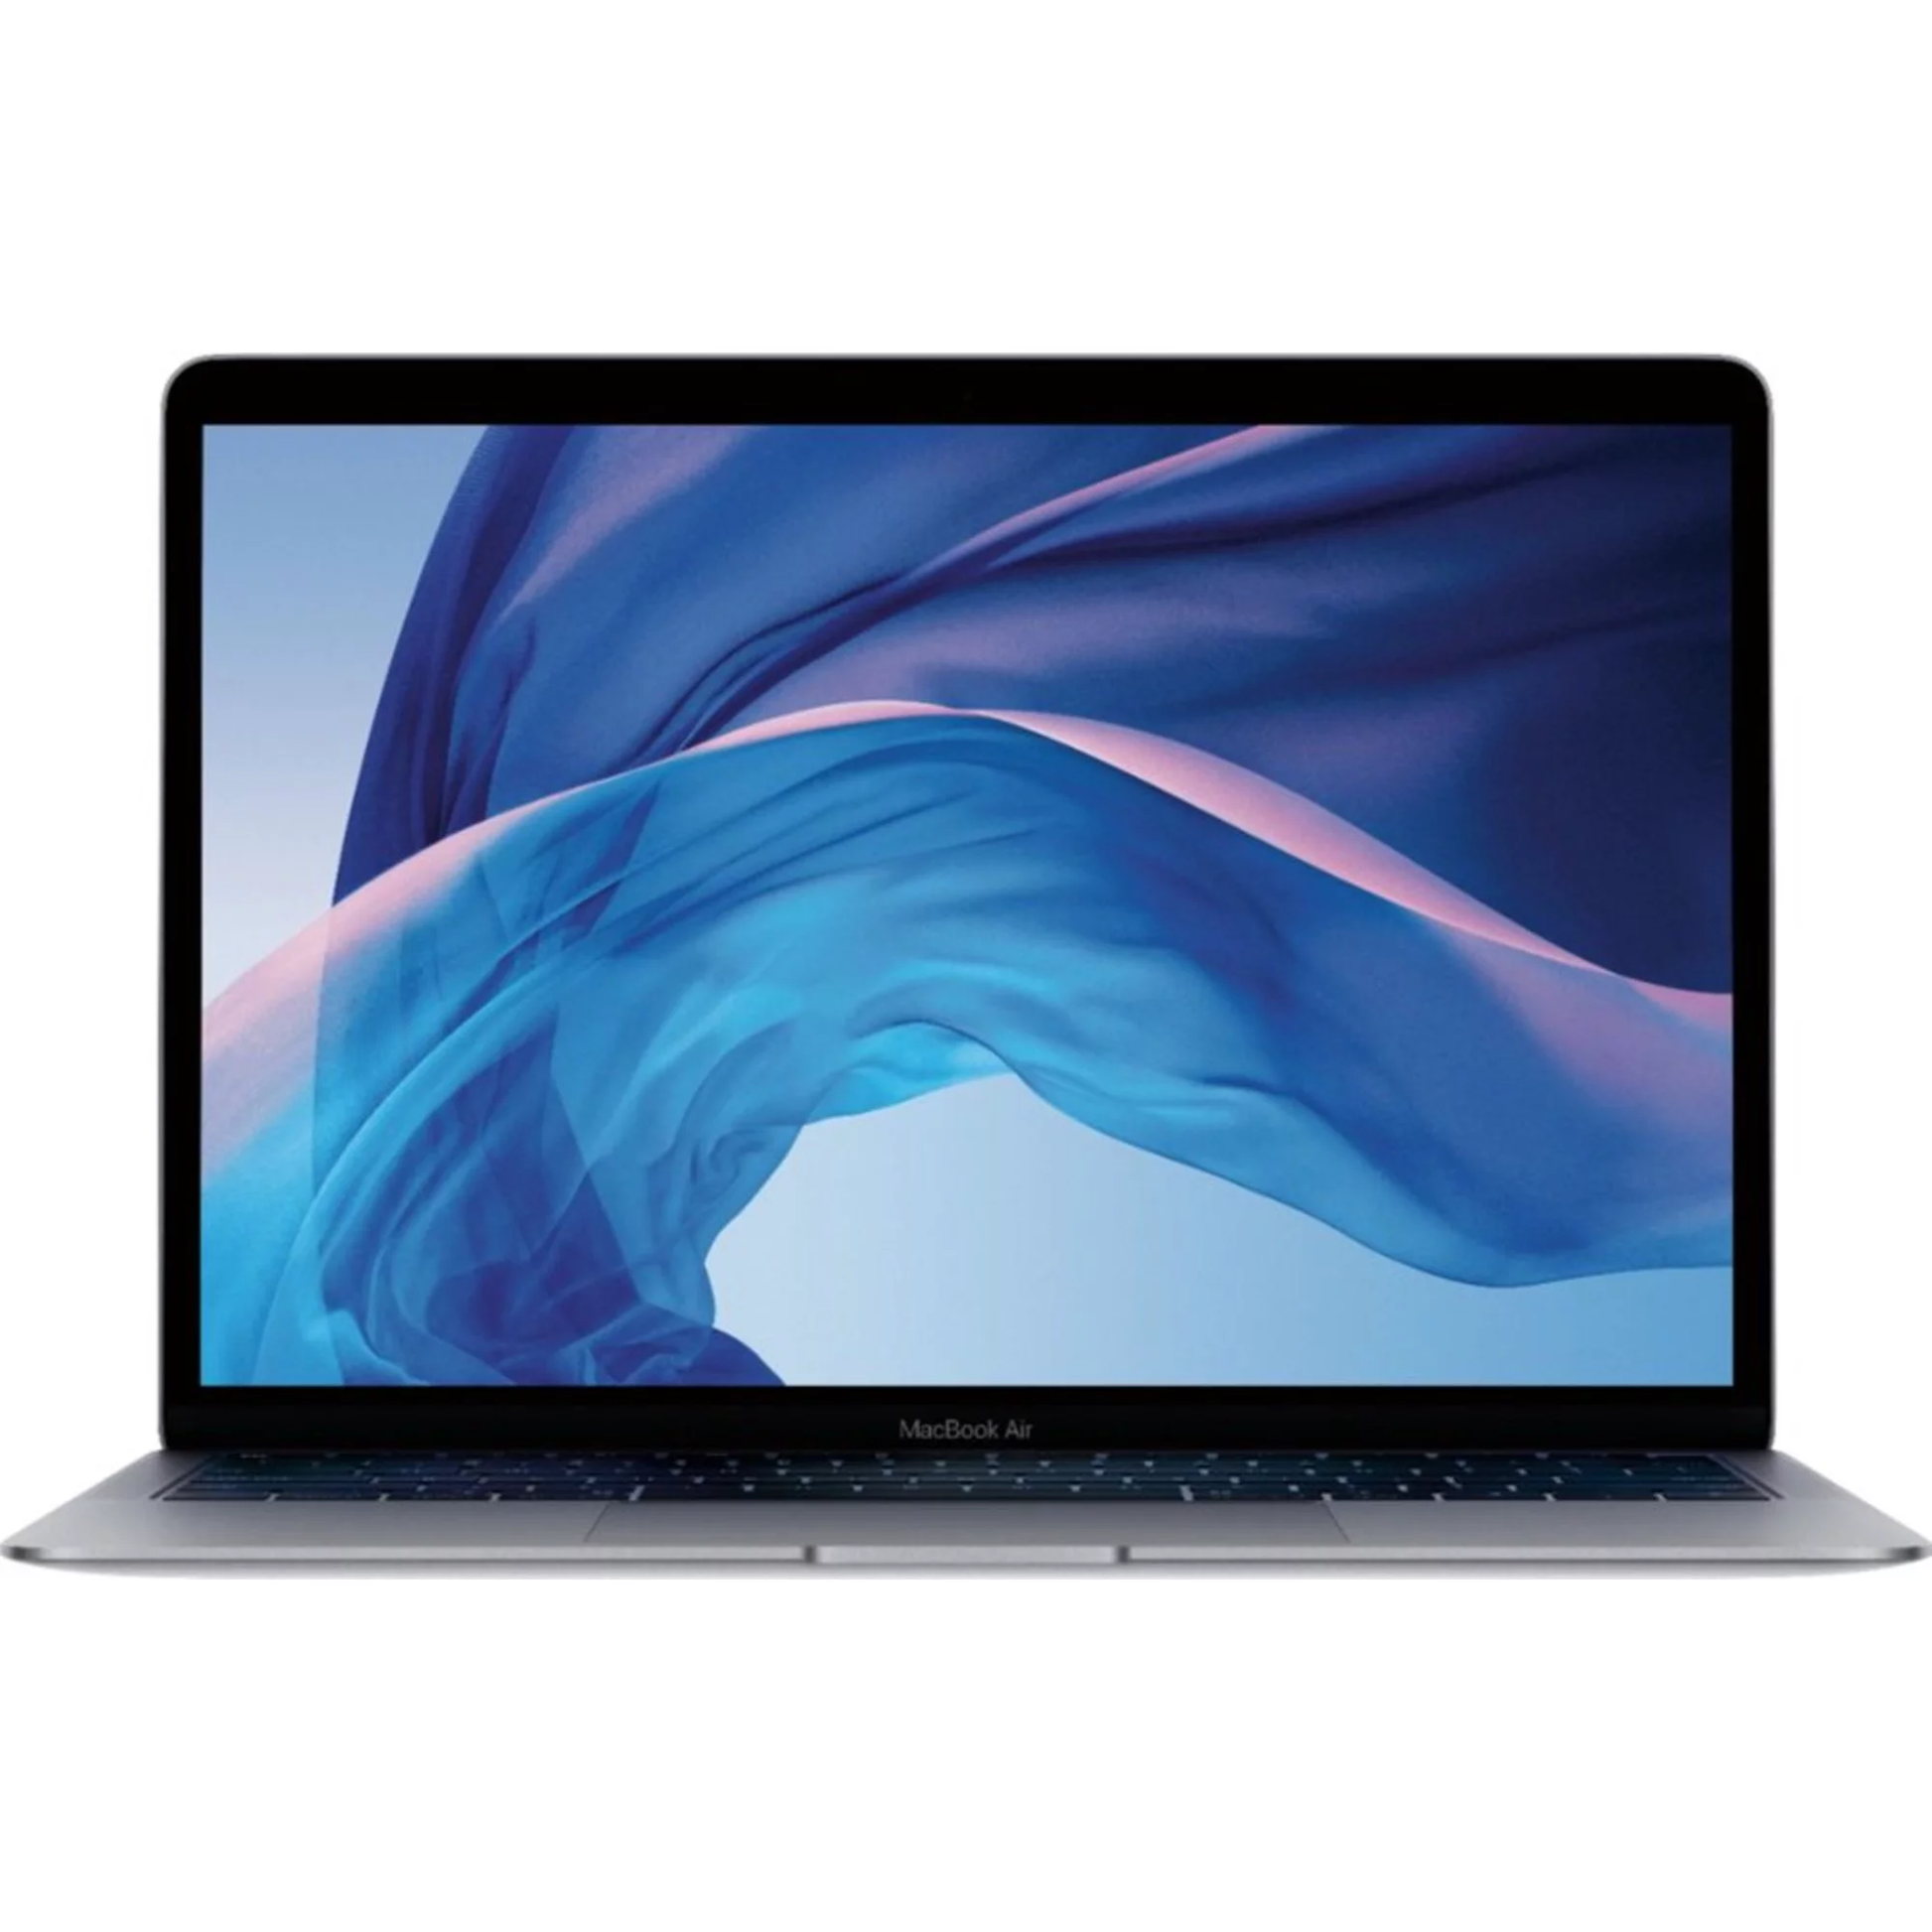 BUNDLE - 2018 MacBook Air 13